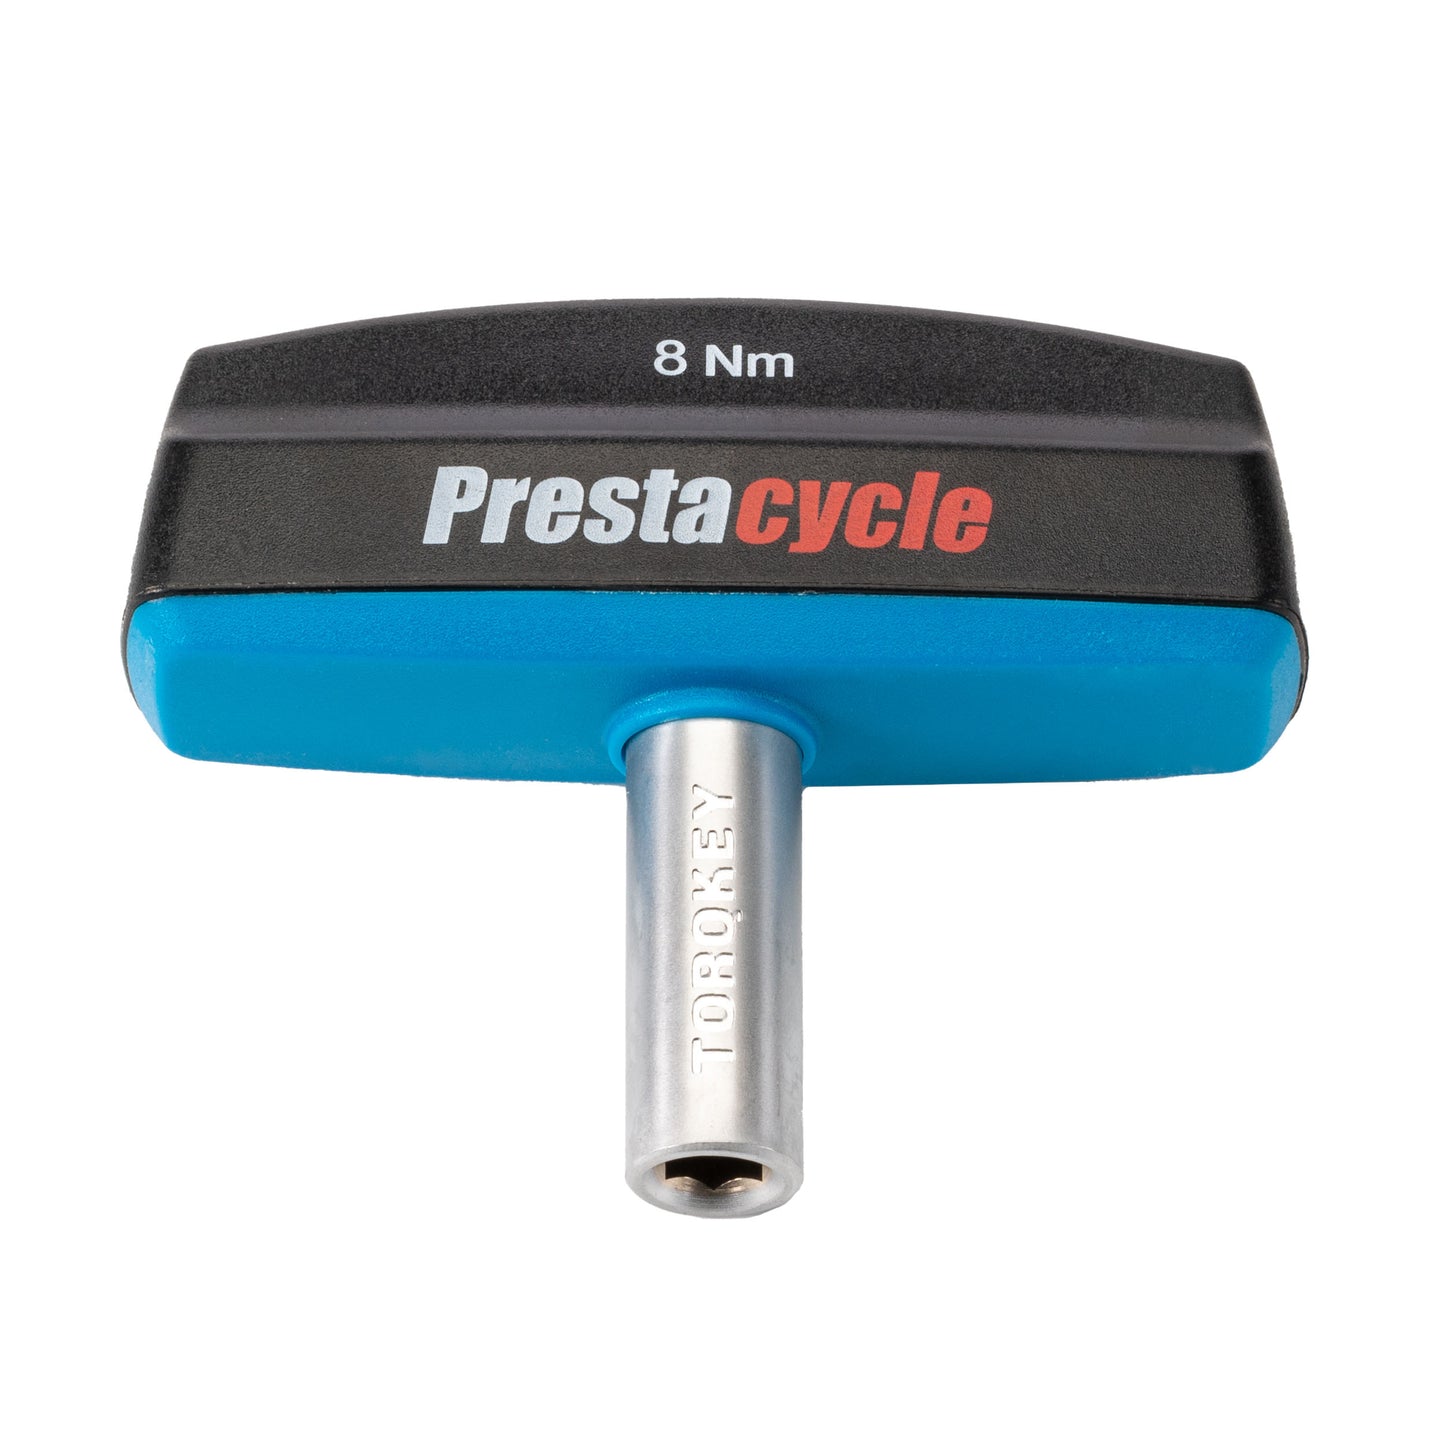 Prestacycle Pro TorqKeys - 8Nm T-Handle Torque-Limiting Bits Tool